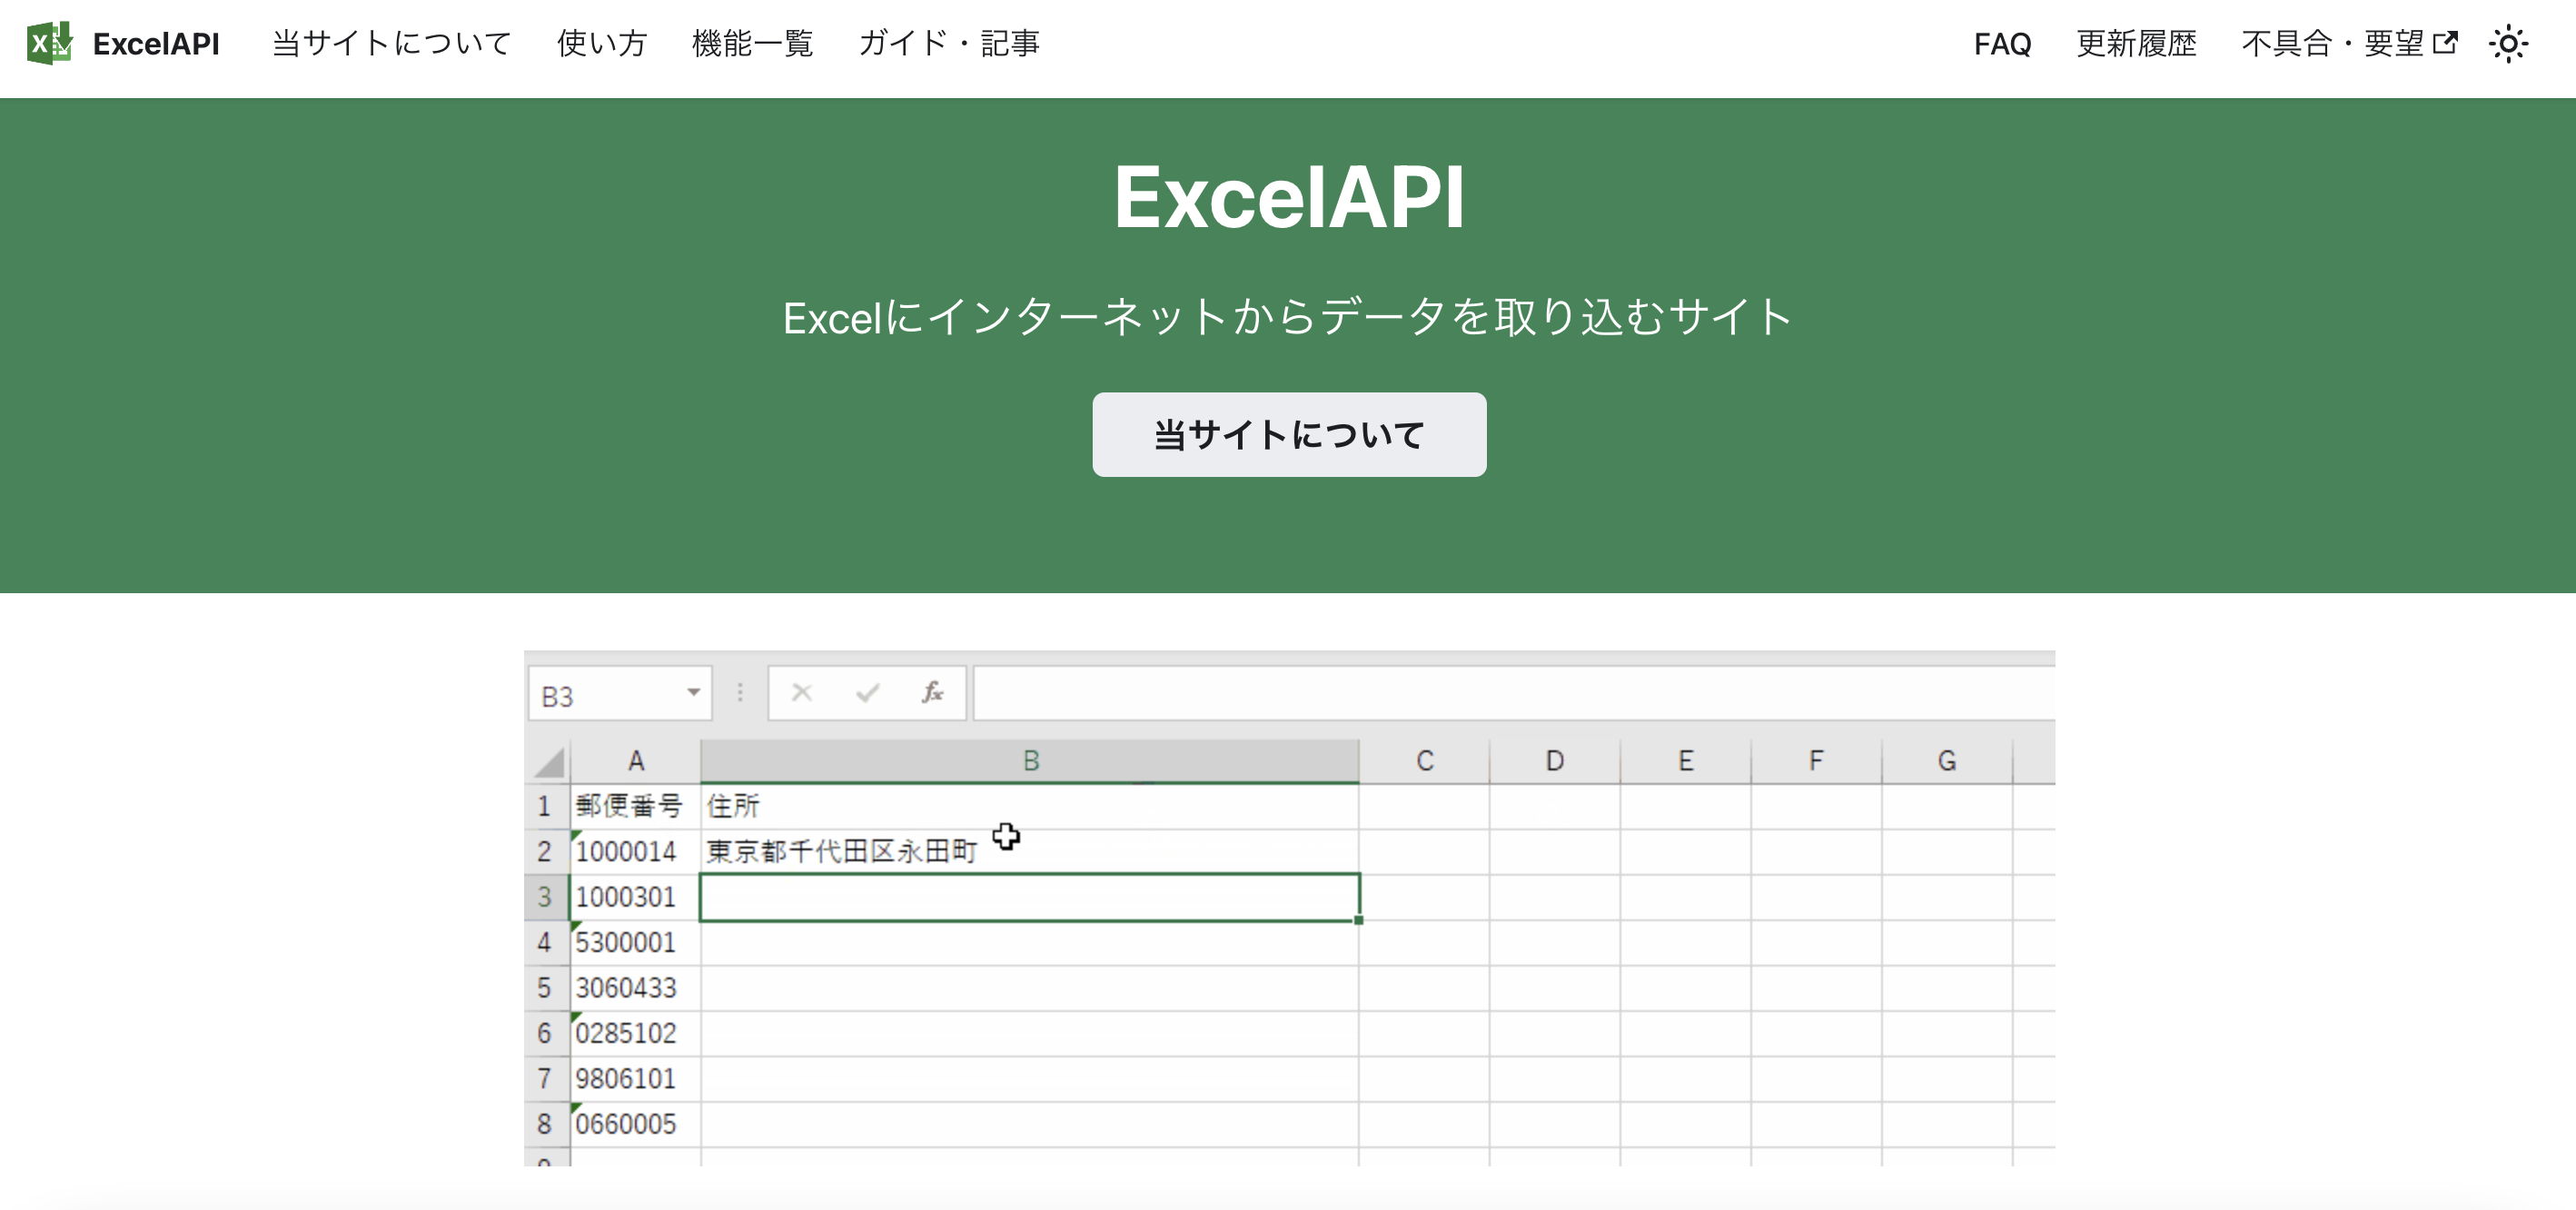 WEBSERVICE関数を使ってWeb情報をExcelに取り込む“ExcelAPI”が超便利！！